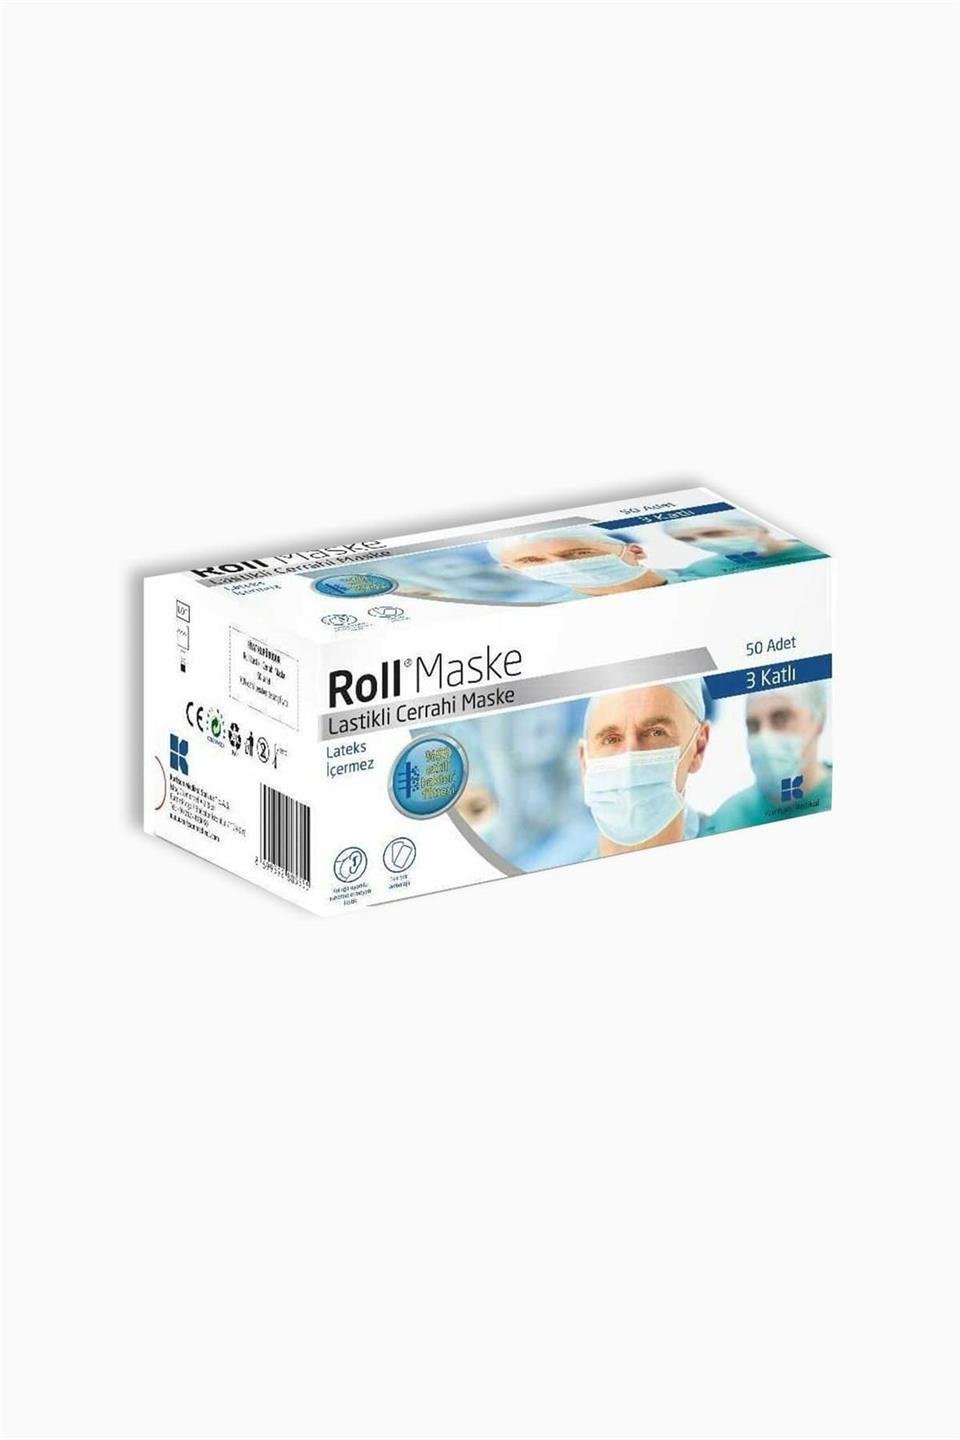 Roll Maske 3 Katlı Tekli Paketlenmiş Cerrahi Maske Telli 50'li Fiyatı |  Farmakozmetika